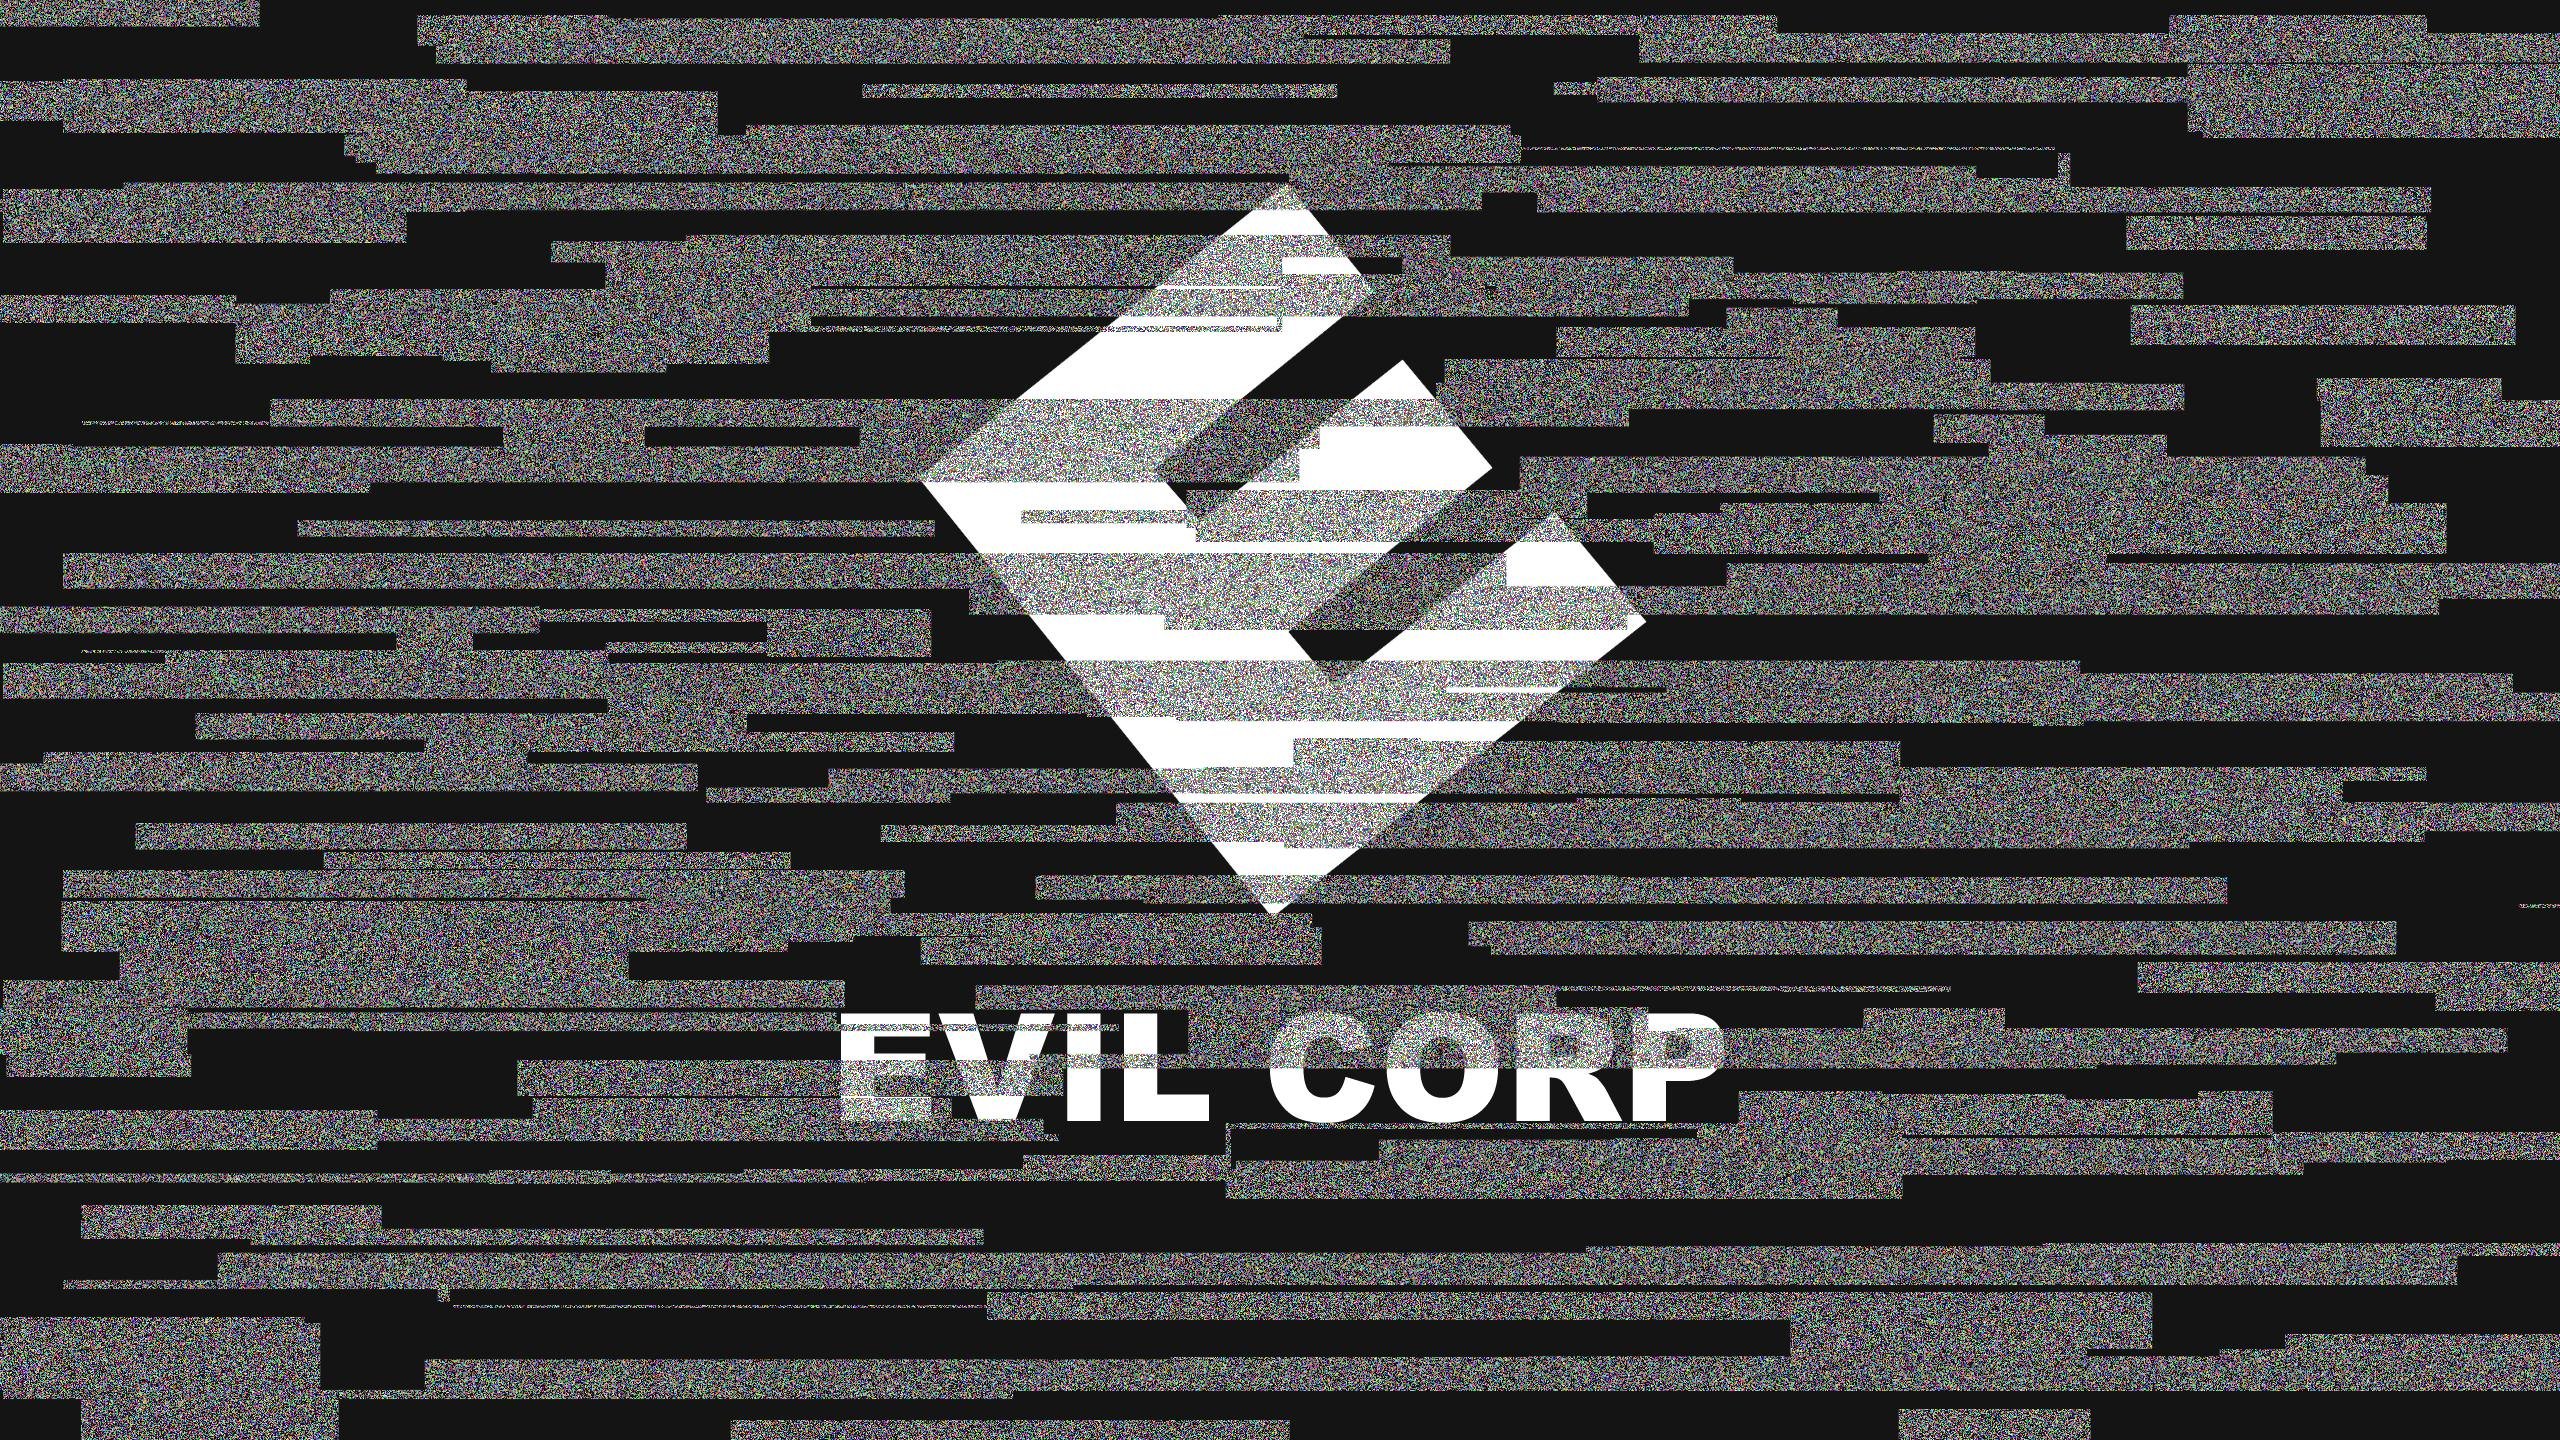 General 2560x1440 Mr. Robot E Corp EVIL CORP gray